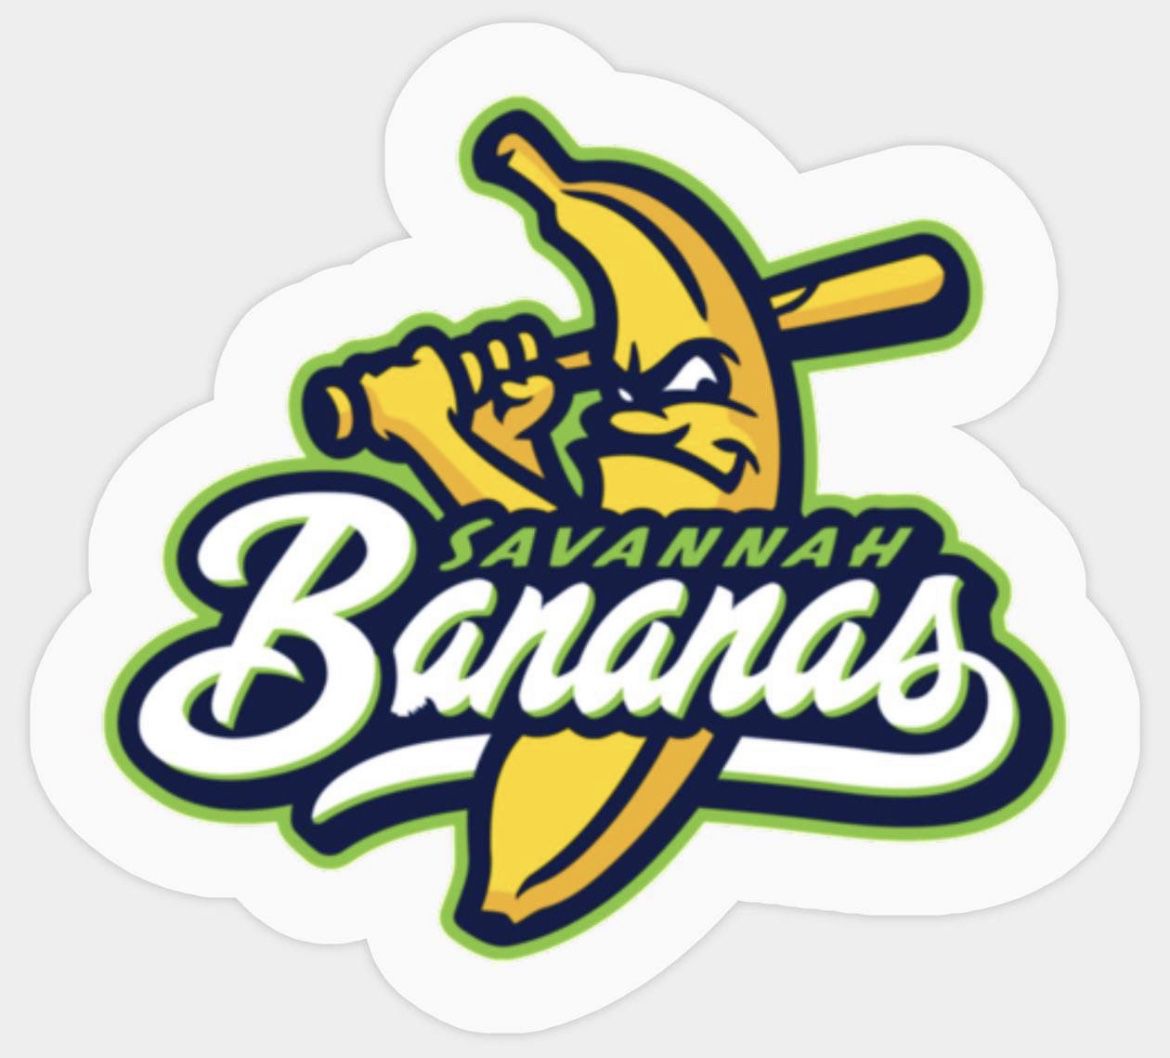 Savannah bananas Tickets 